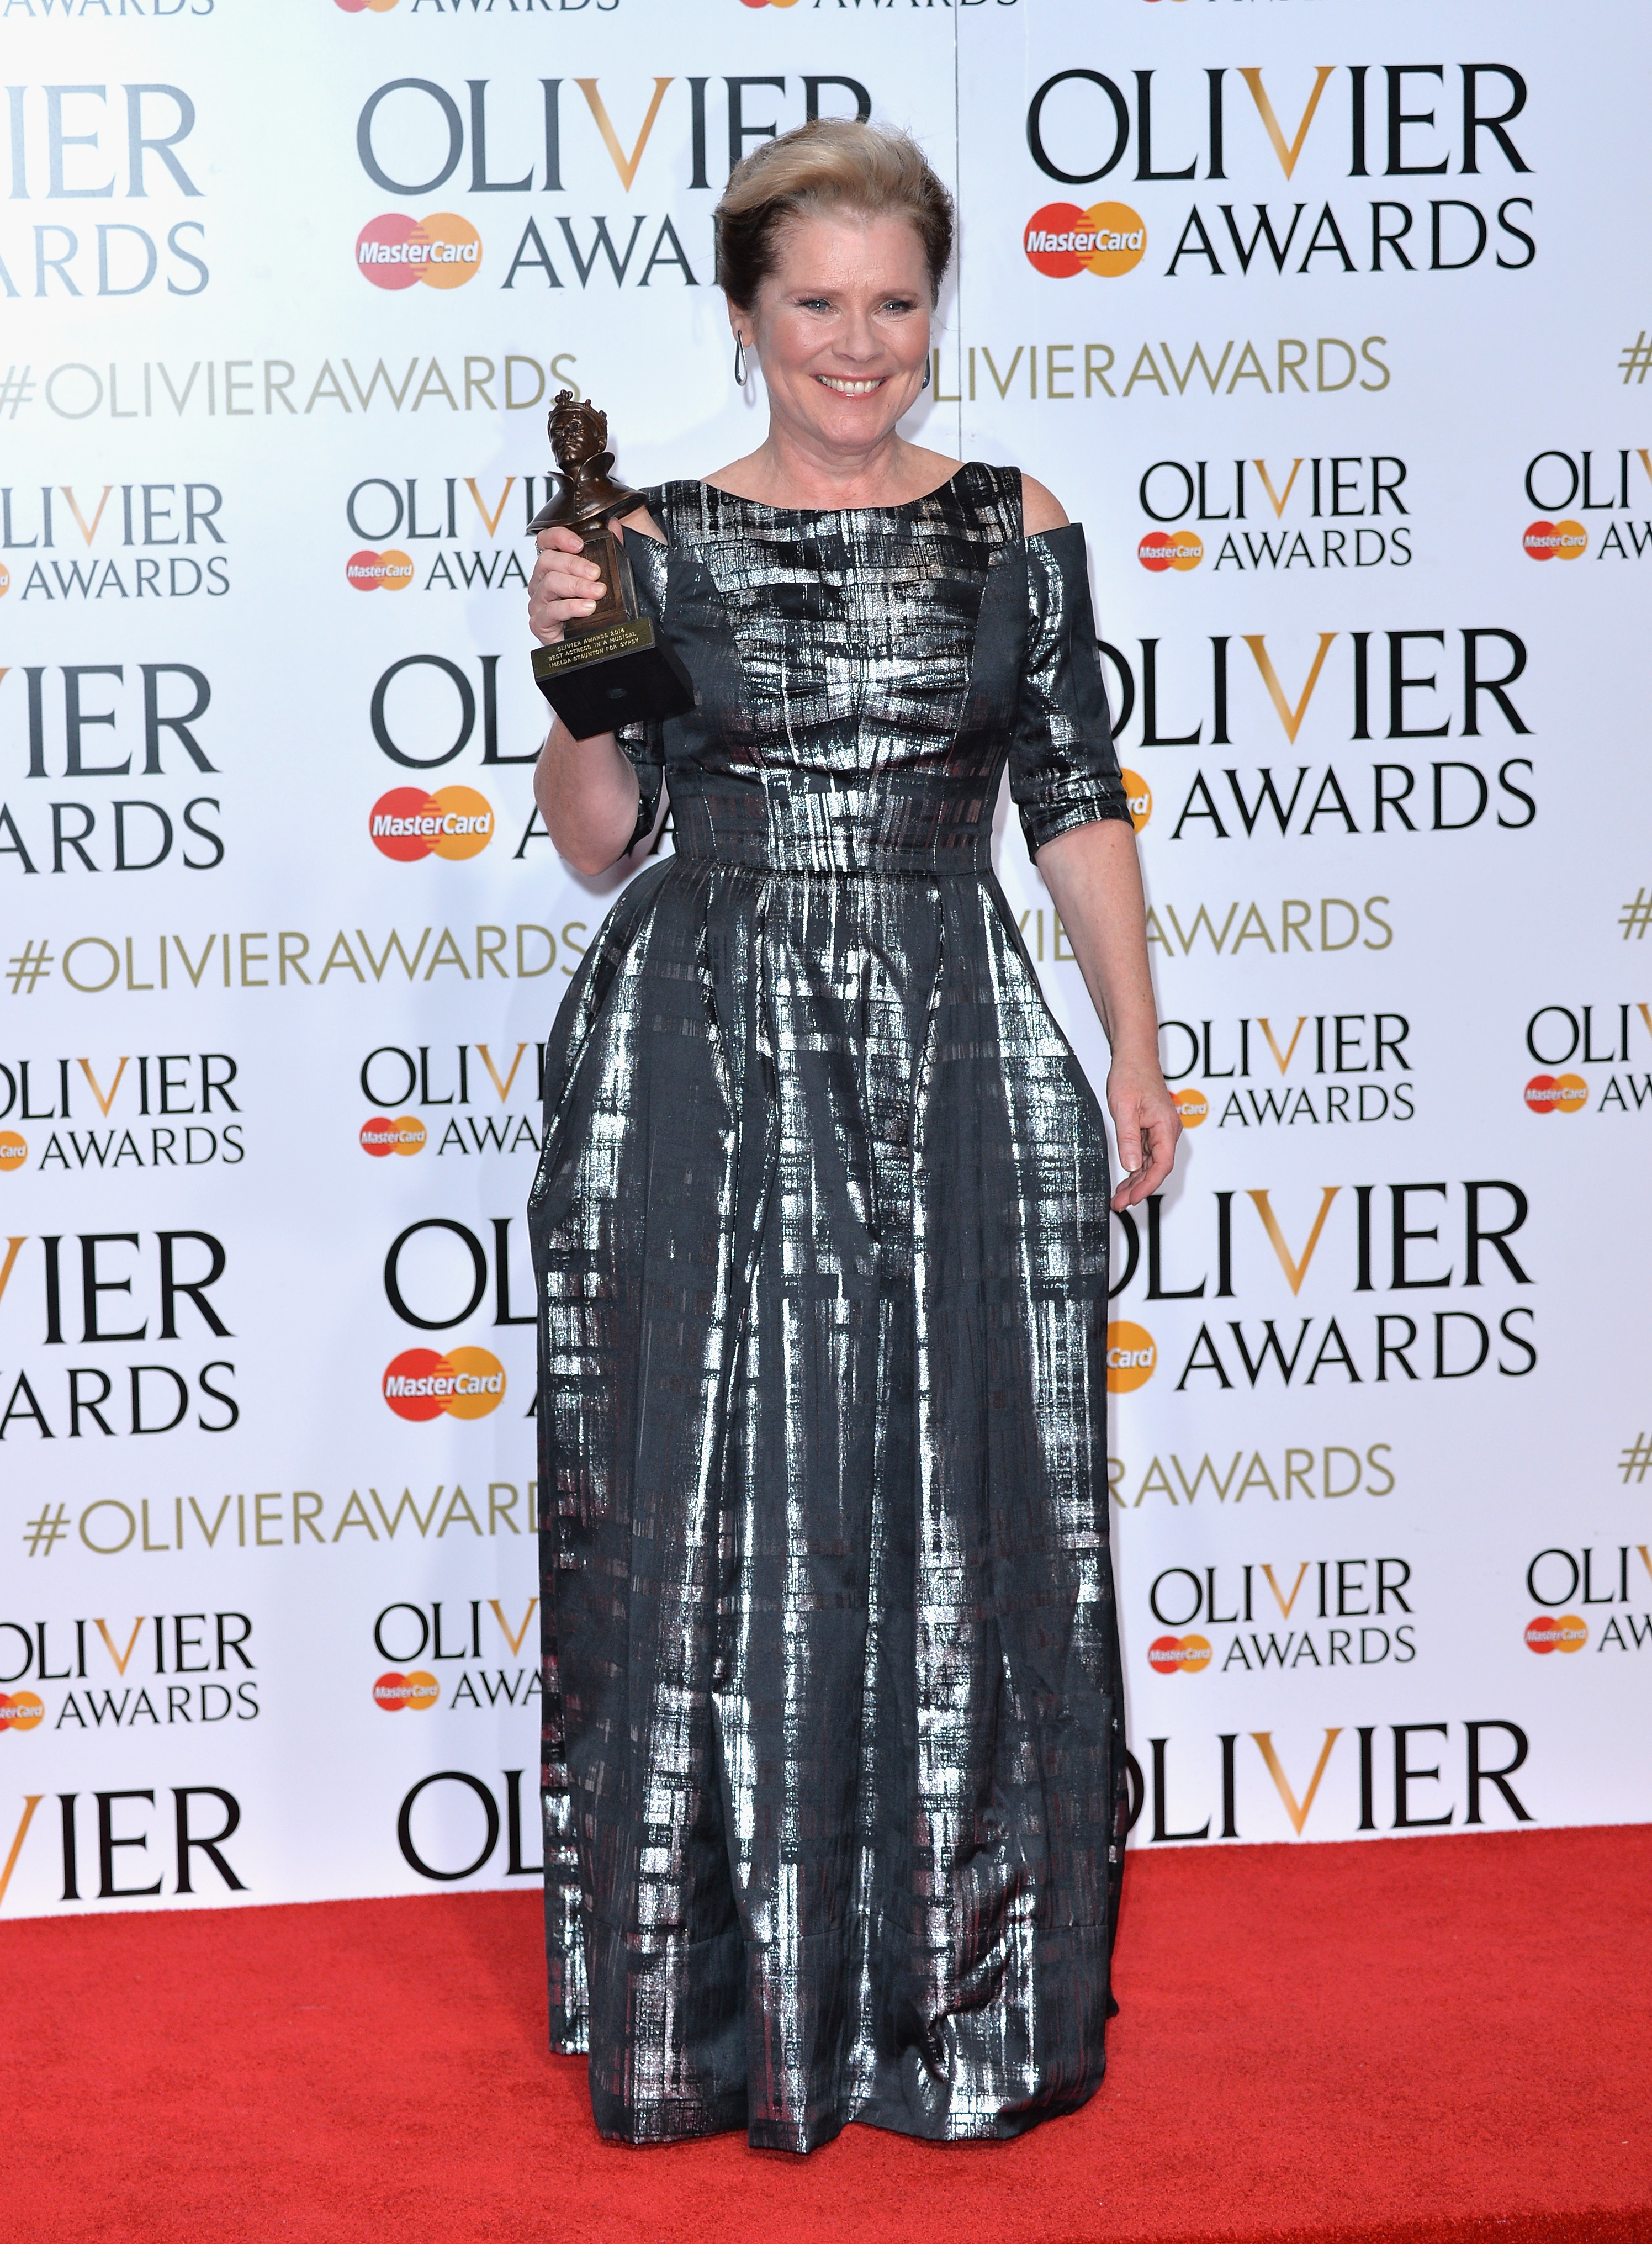 Imelda Staunton Wins Big at Olivier Awards, Other Potter Alums Spotted